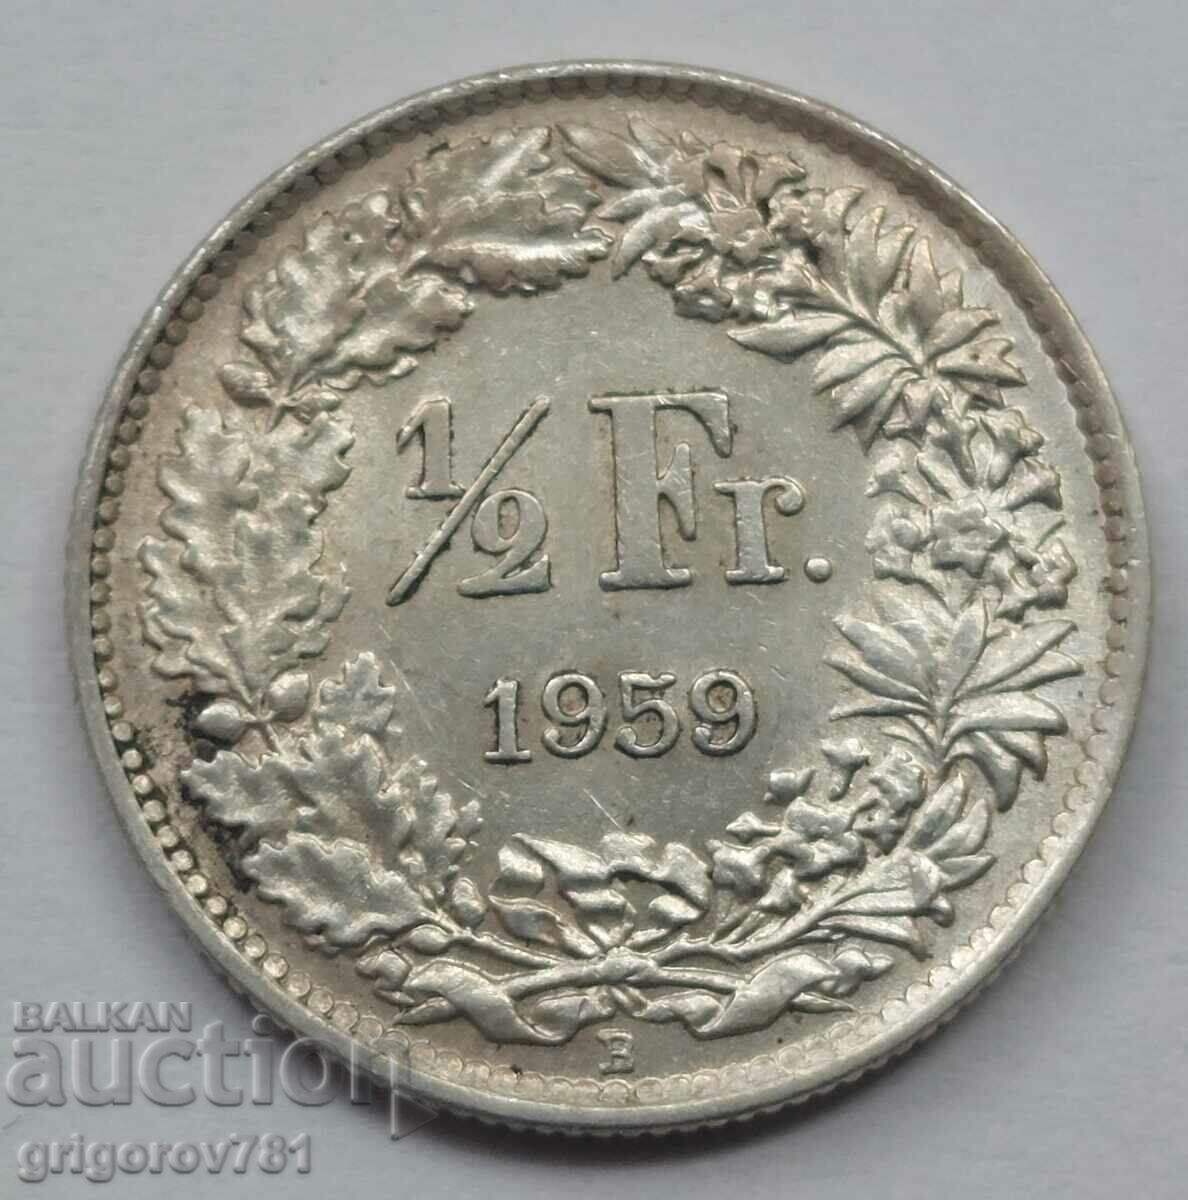 1/2 Franc Argint Elveția 1959 B - Monedă de argint #127